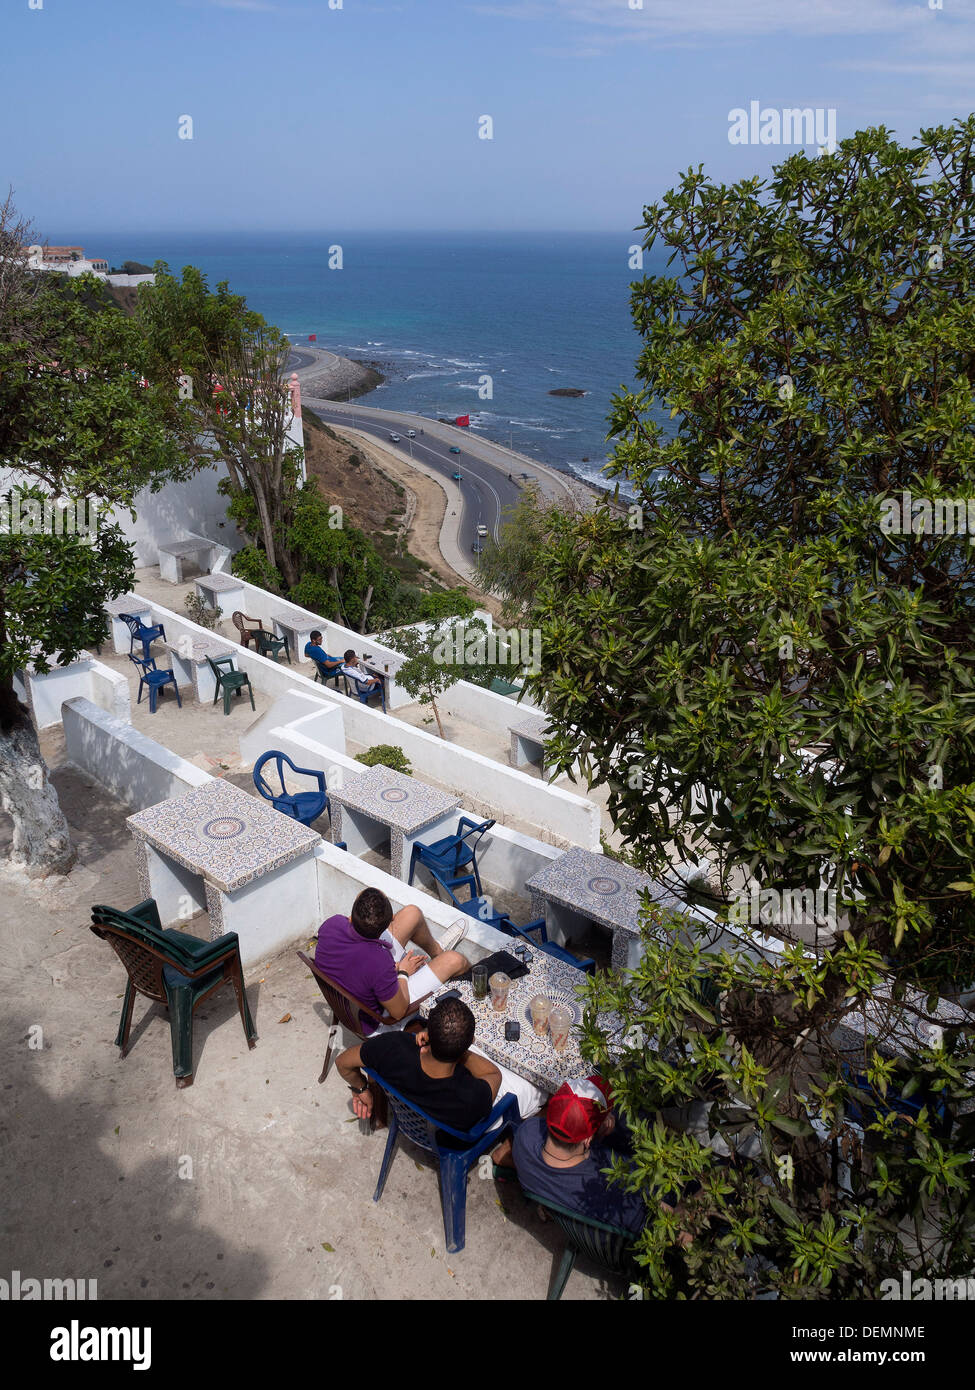 Café im Freien direkt am Meer in Tanger, Marokko Stockfoto